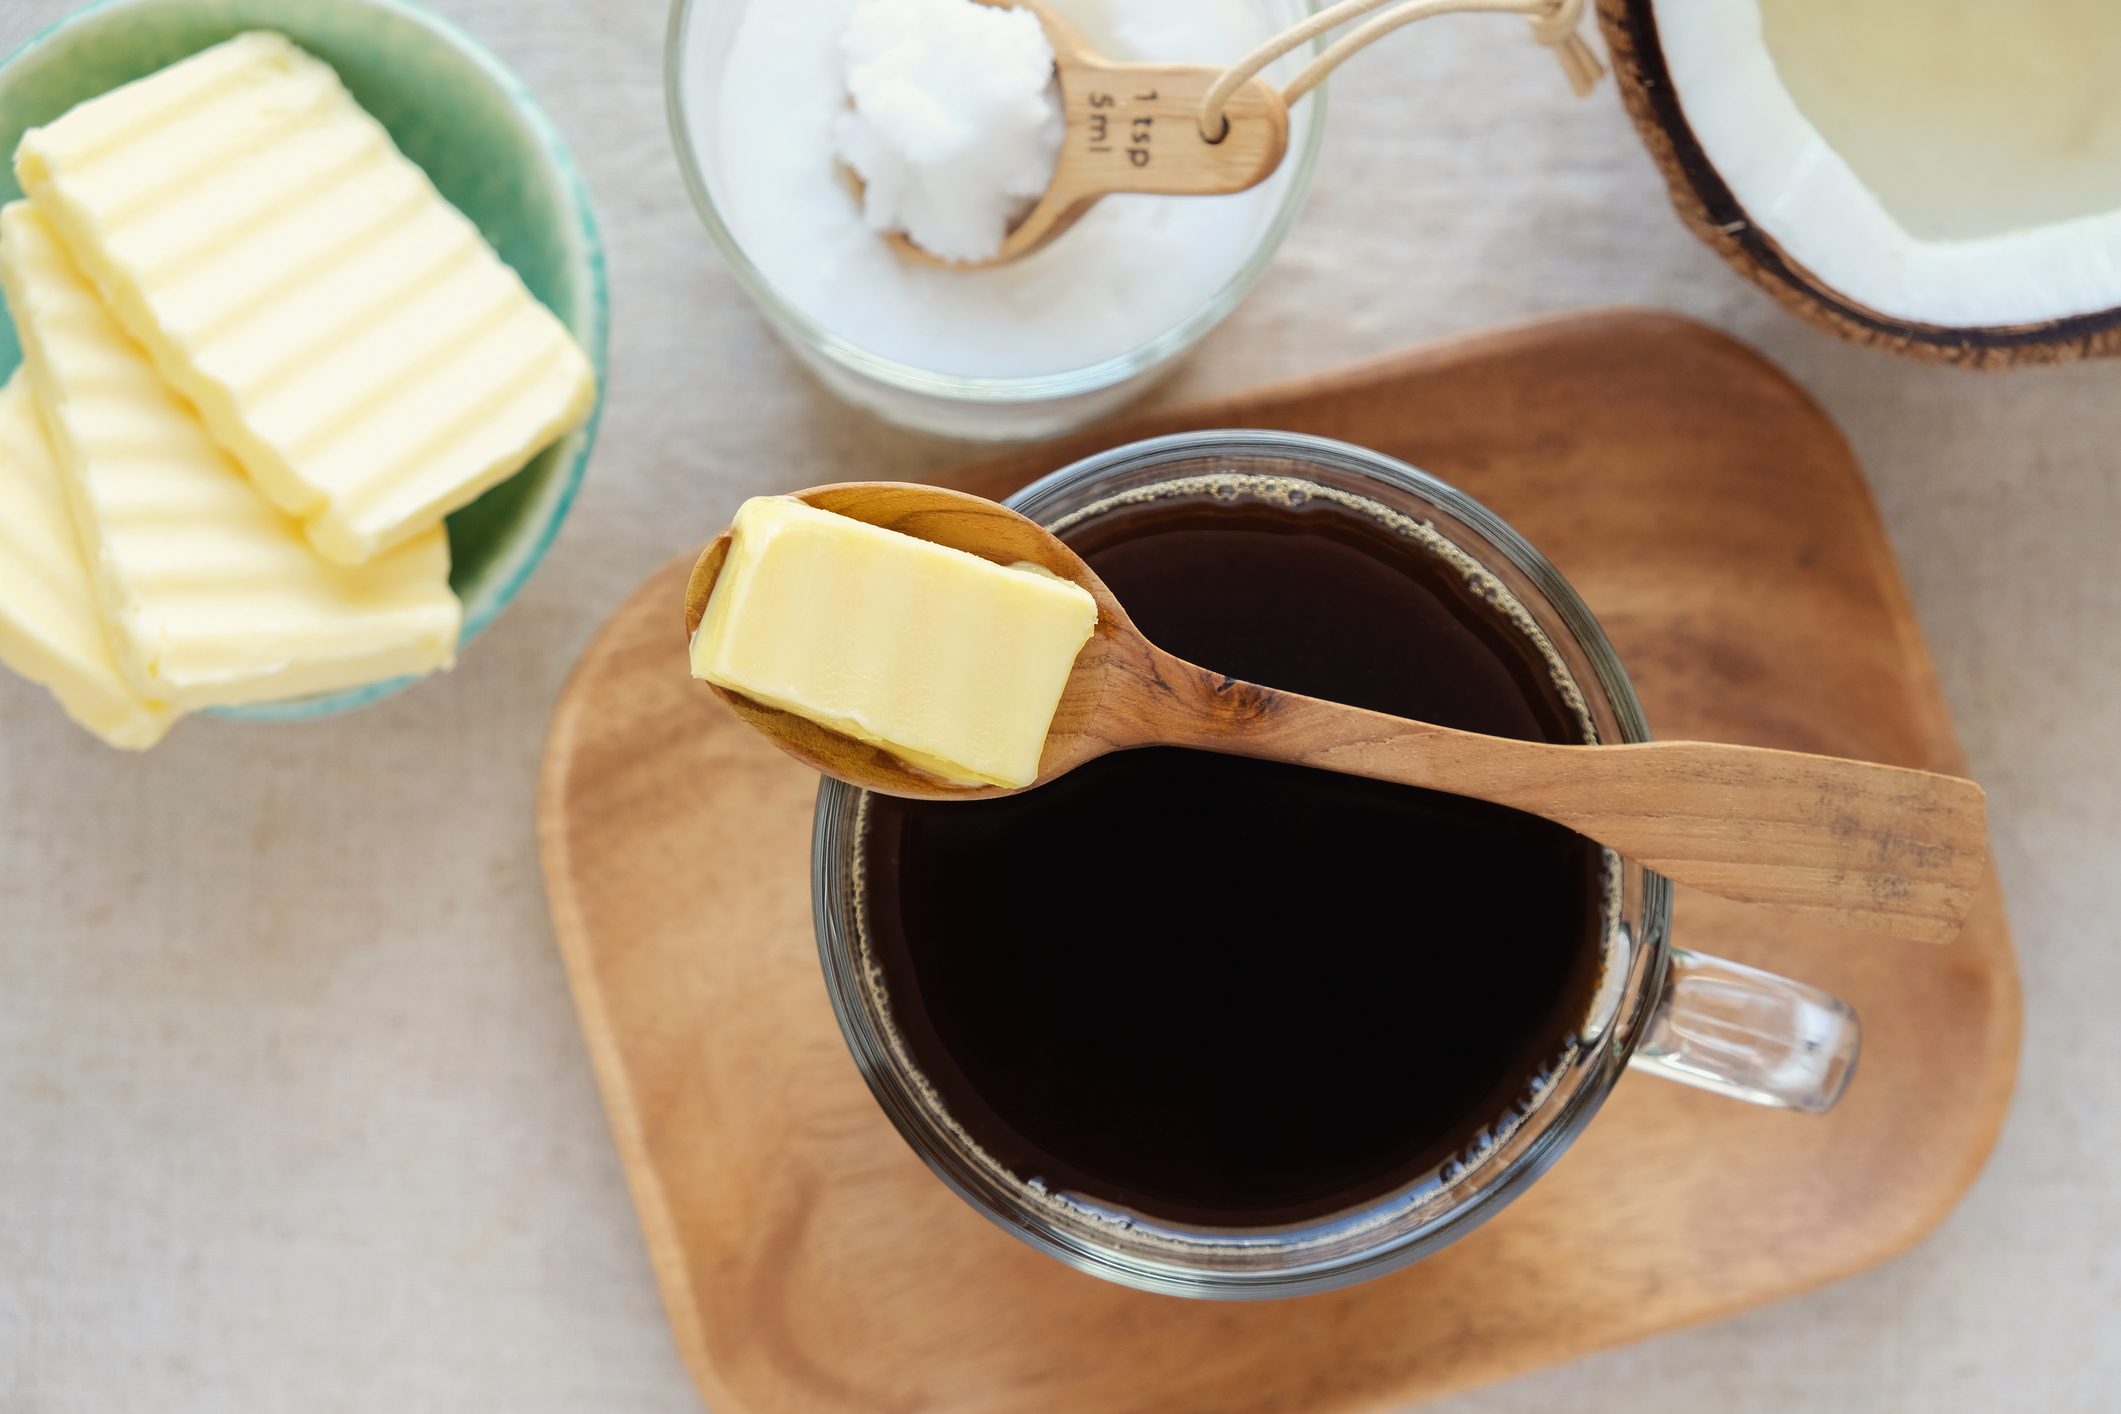 Homemade Bulletproof Coffee & Its Benefits (Paleo, Keto)